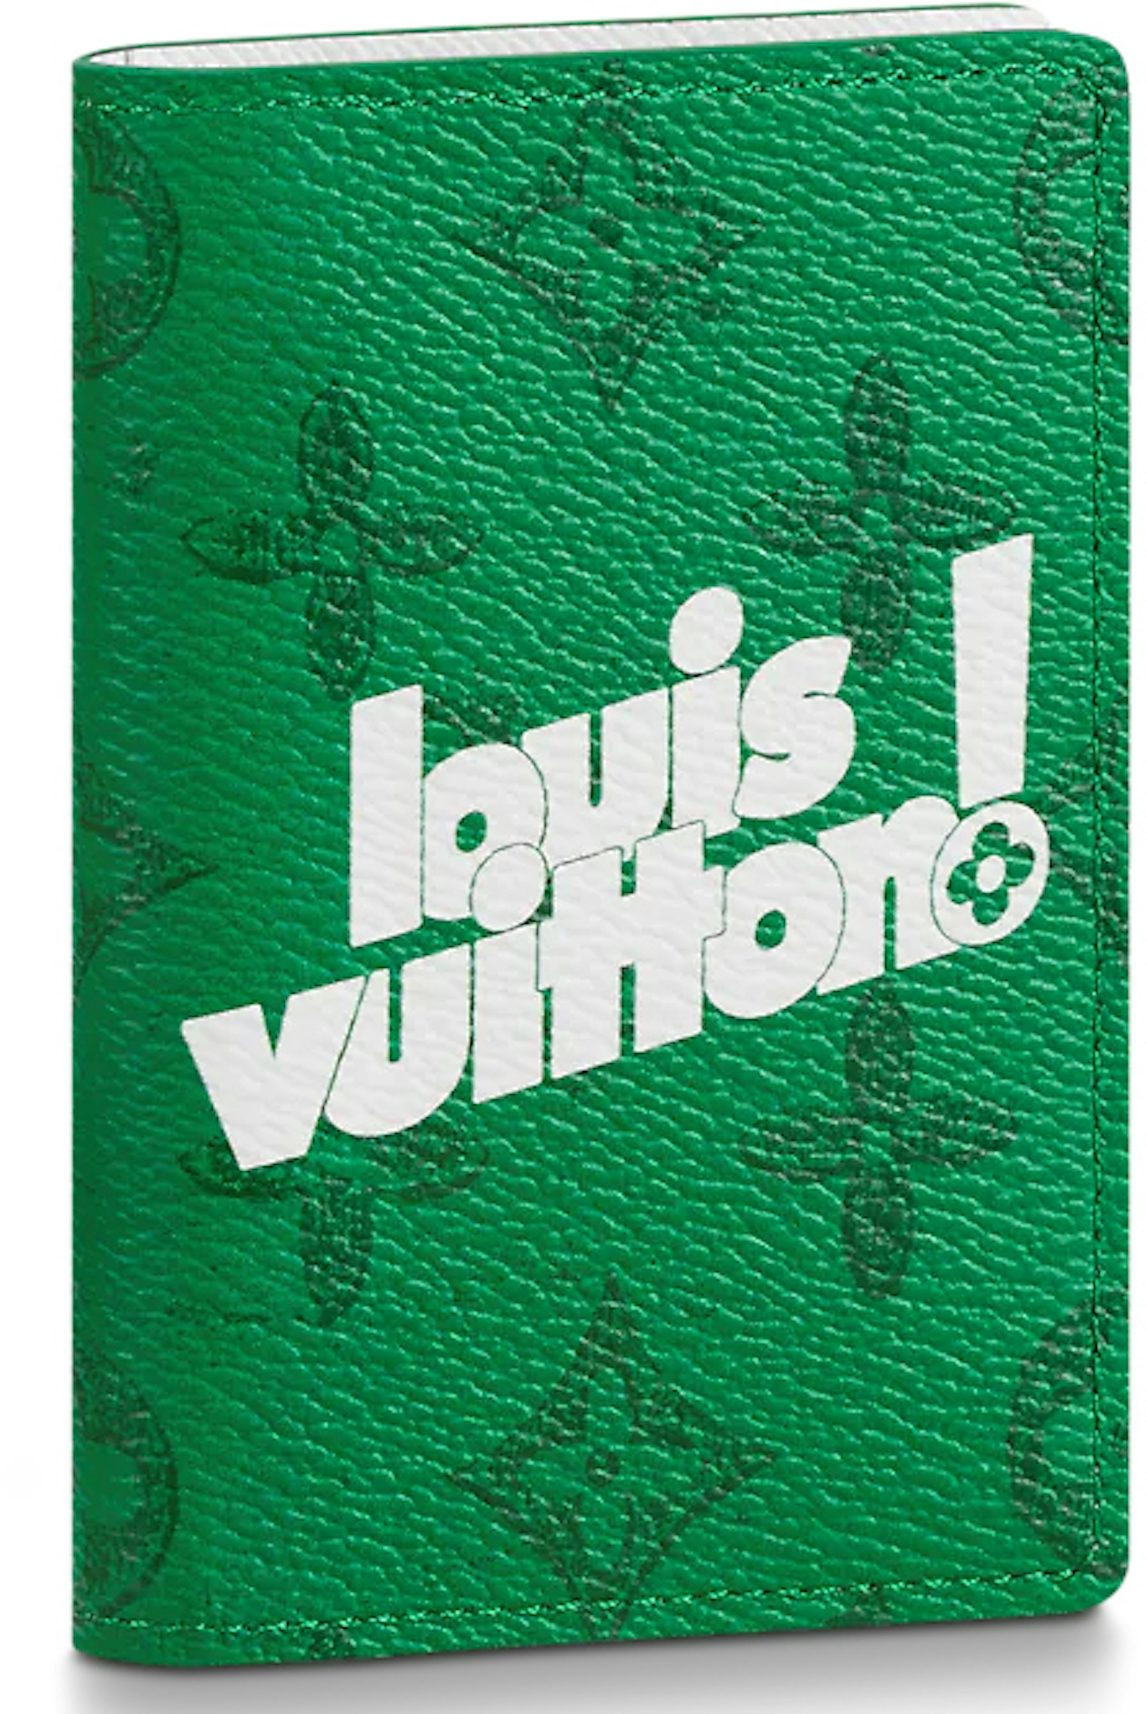 Louis Vuitton Pocket Organizer Monogram Green in Coated Canvas - US